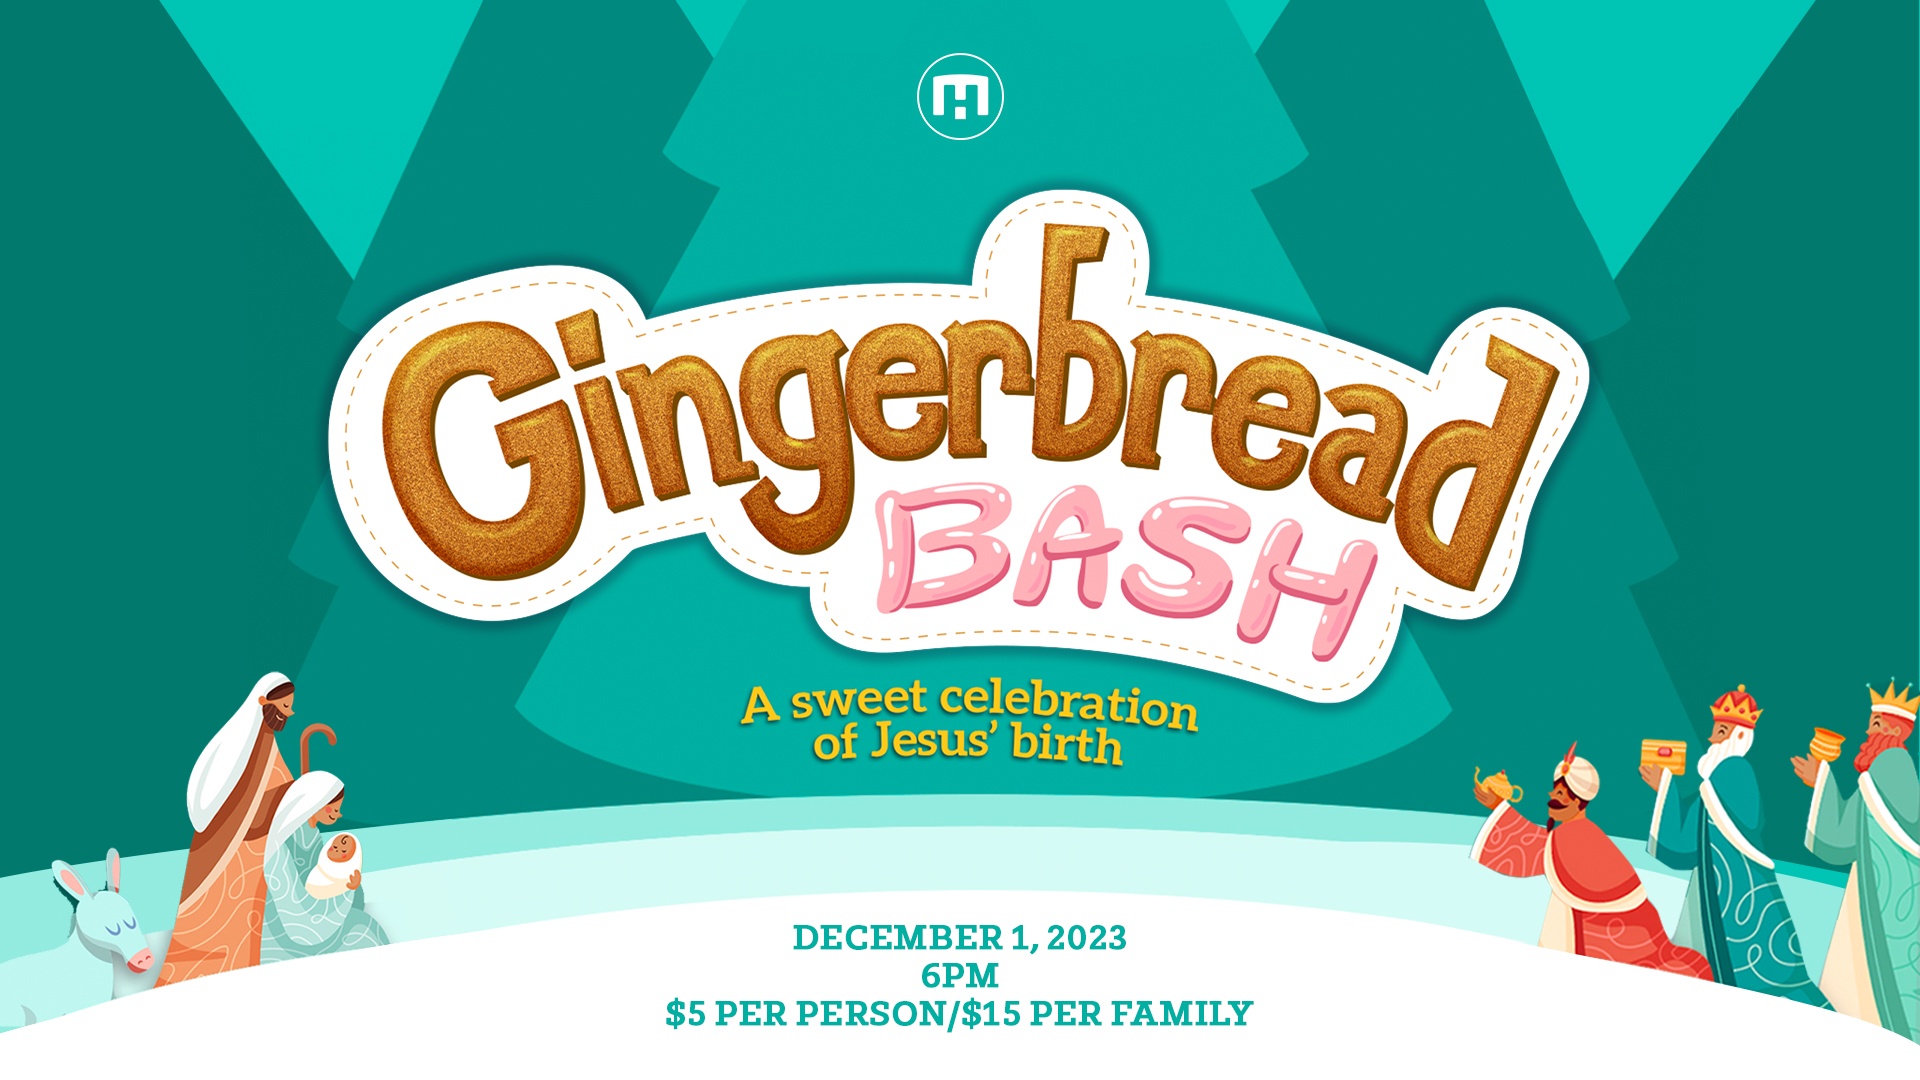 MH Gingerbread bash 1920 x 1080